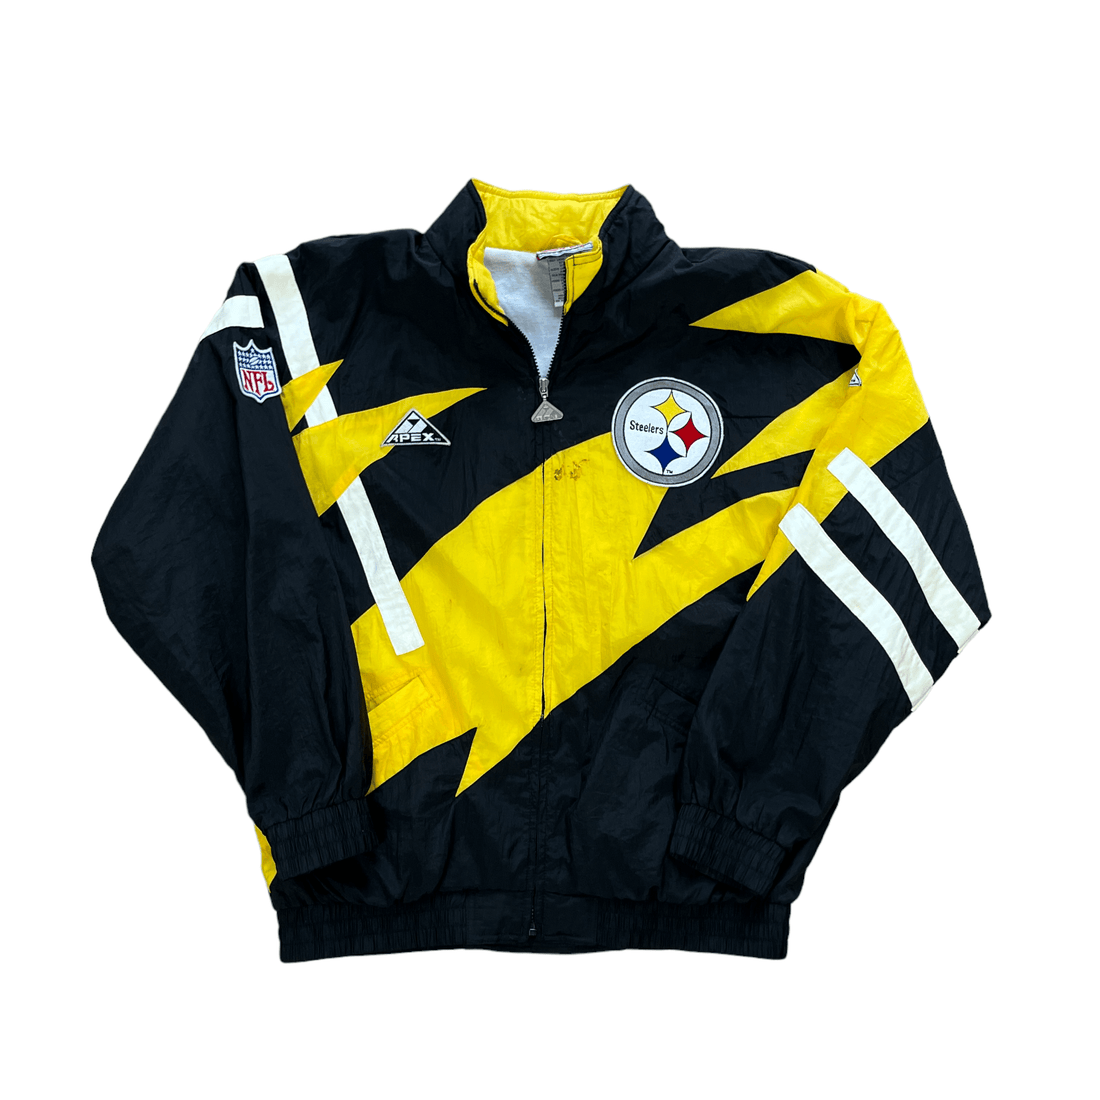 Vintage 90s Black, White + Yellow NFL Pro Steelers Jacket - Large - The Streetwear Studio